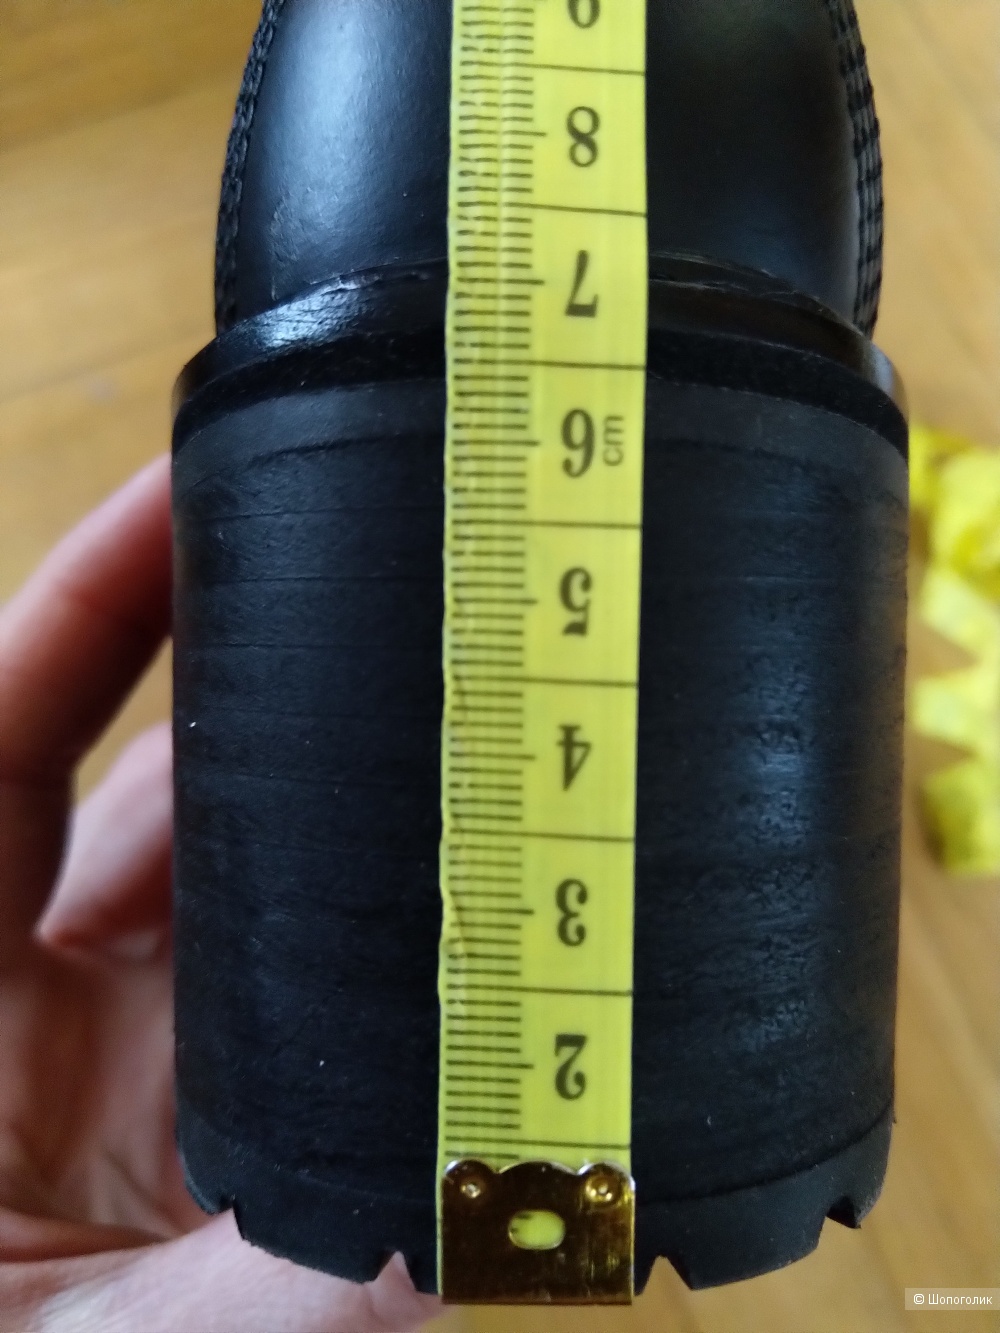 Ботинки Timberland, размер EU 37,5